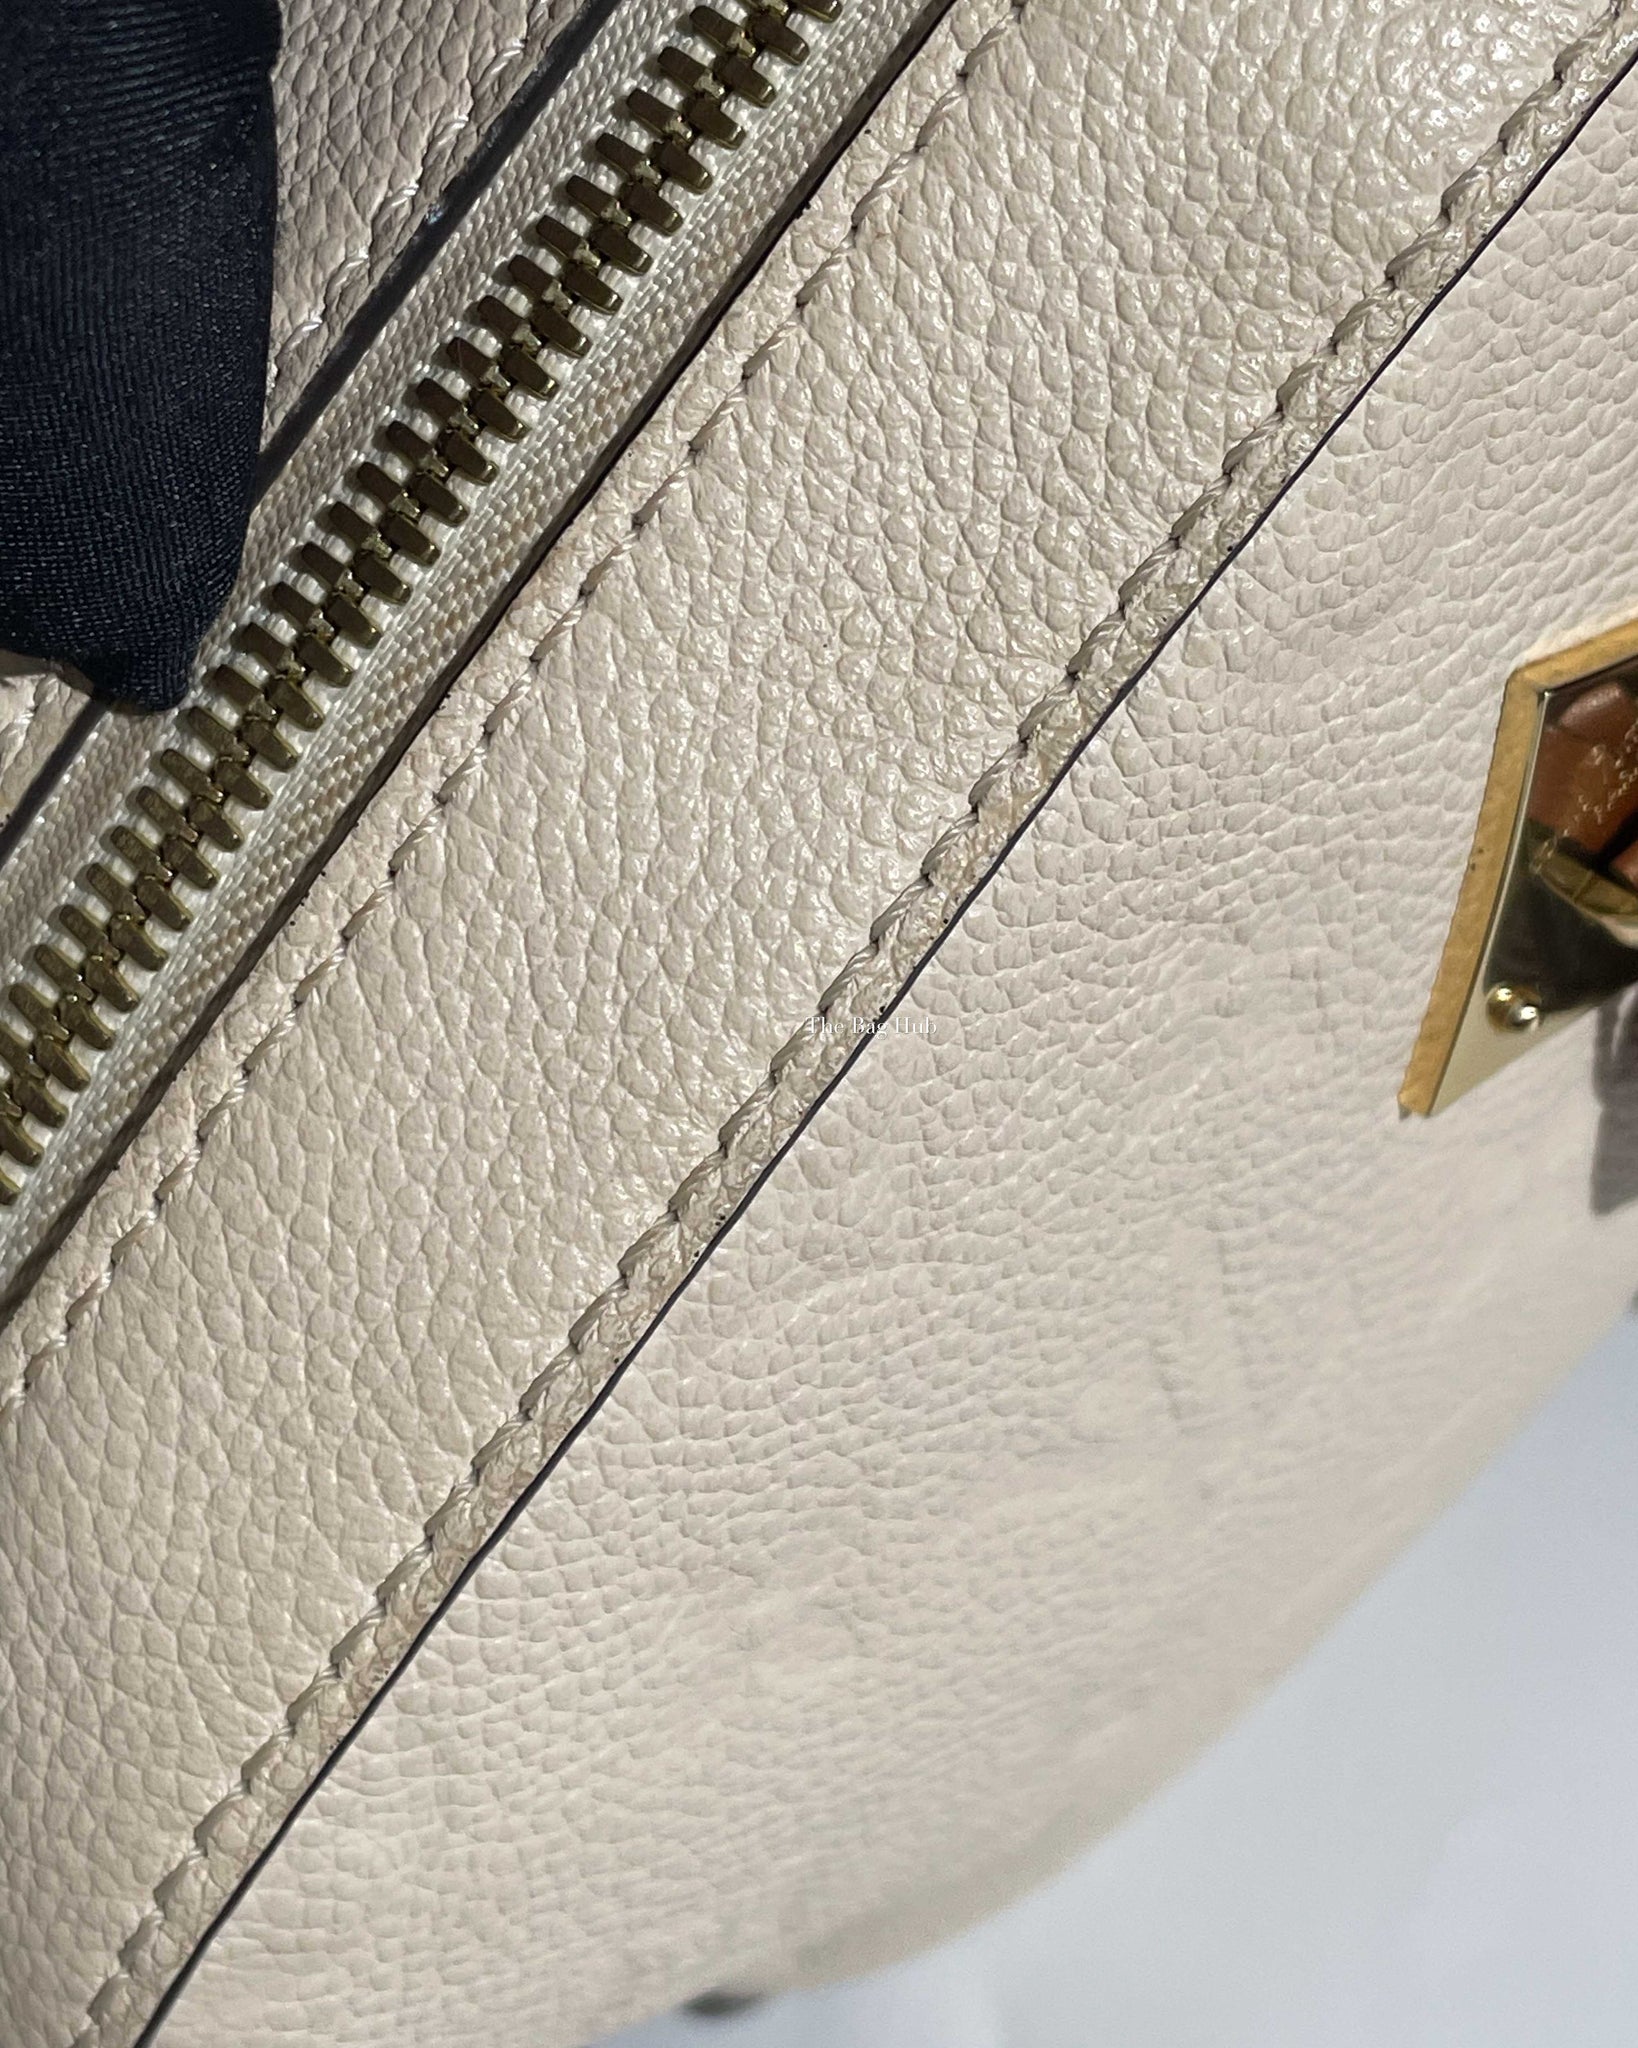 Louis Vuitton Saintonge Handbag Monogram Empreinte Leather Red 1497631